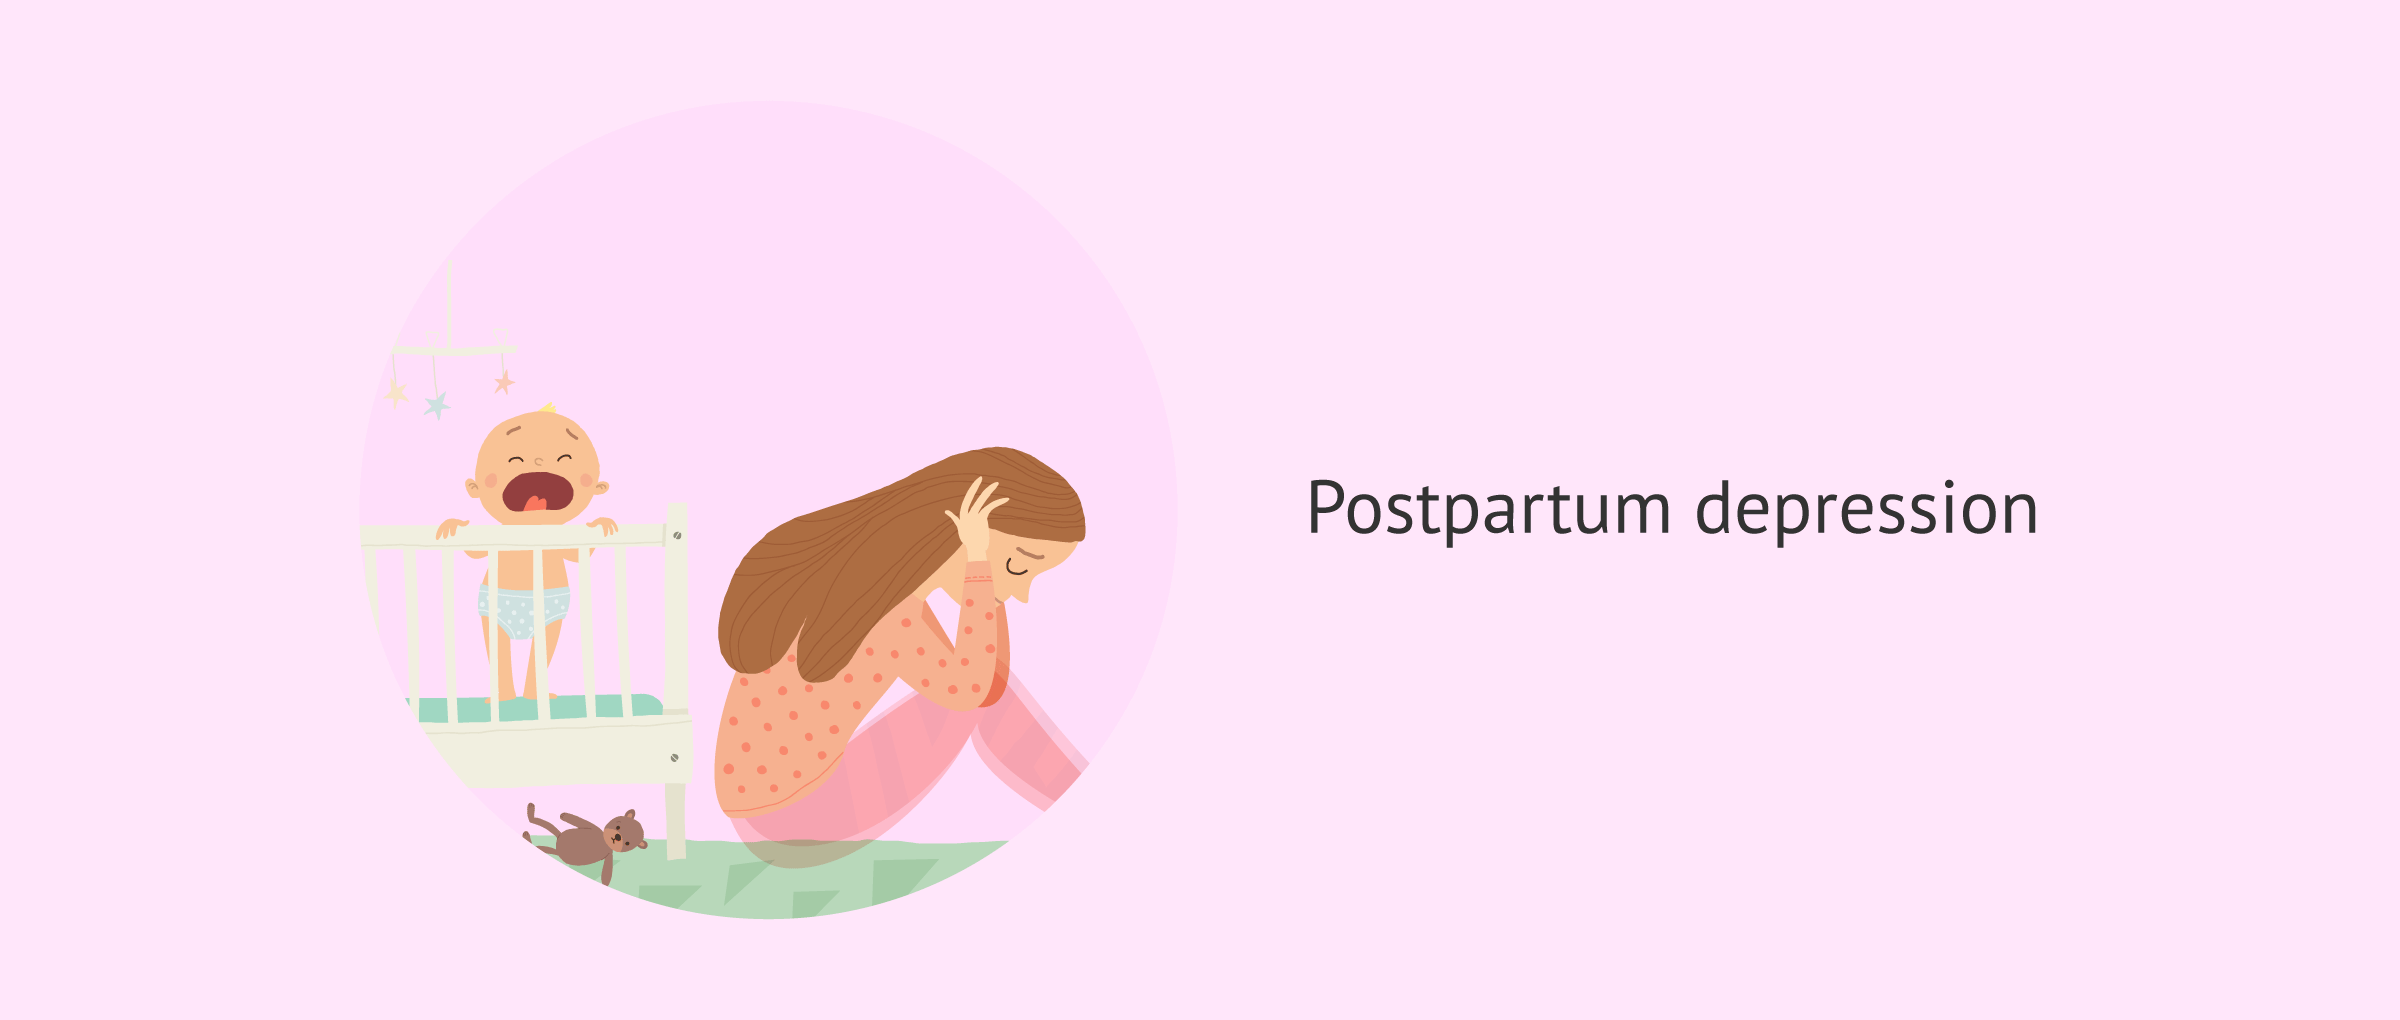 Definition of postpartum depression